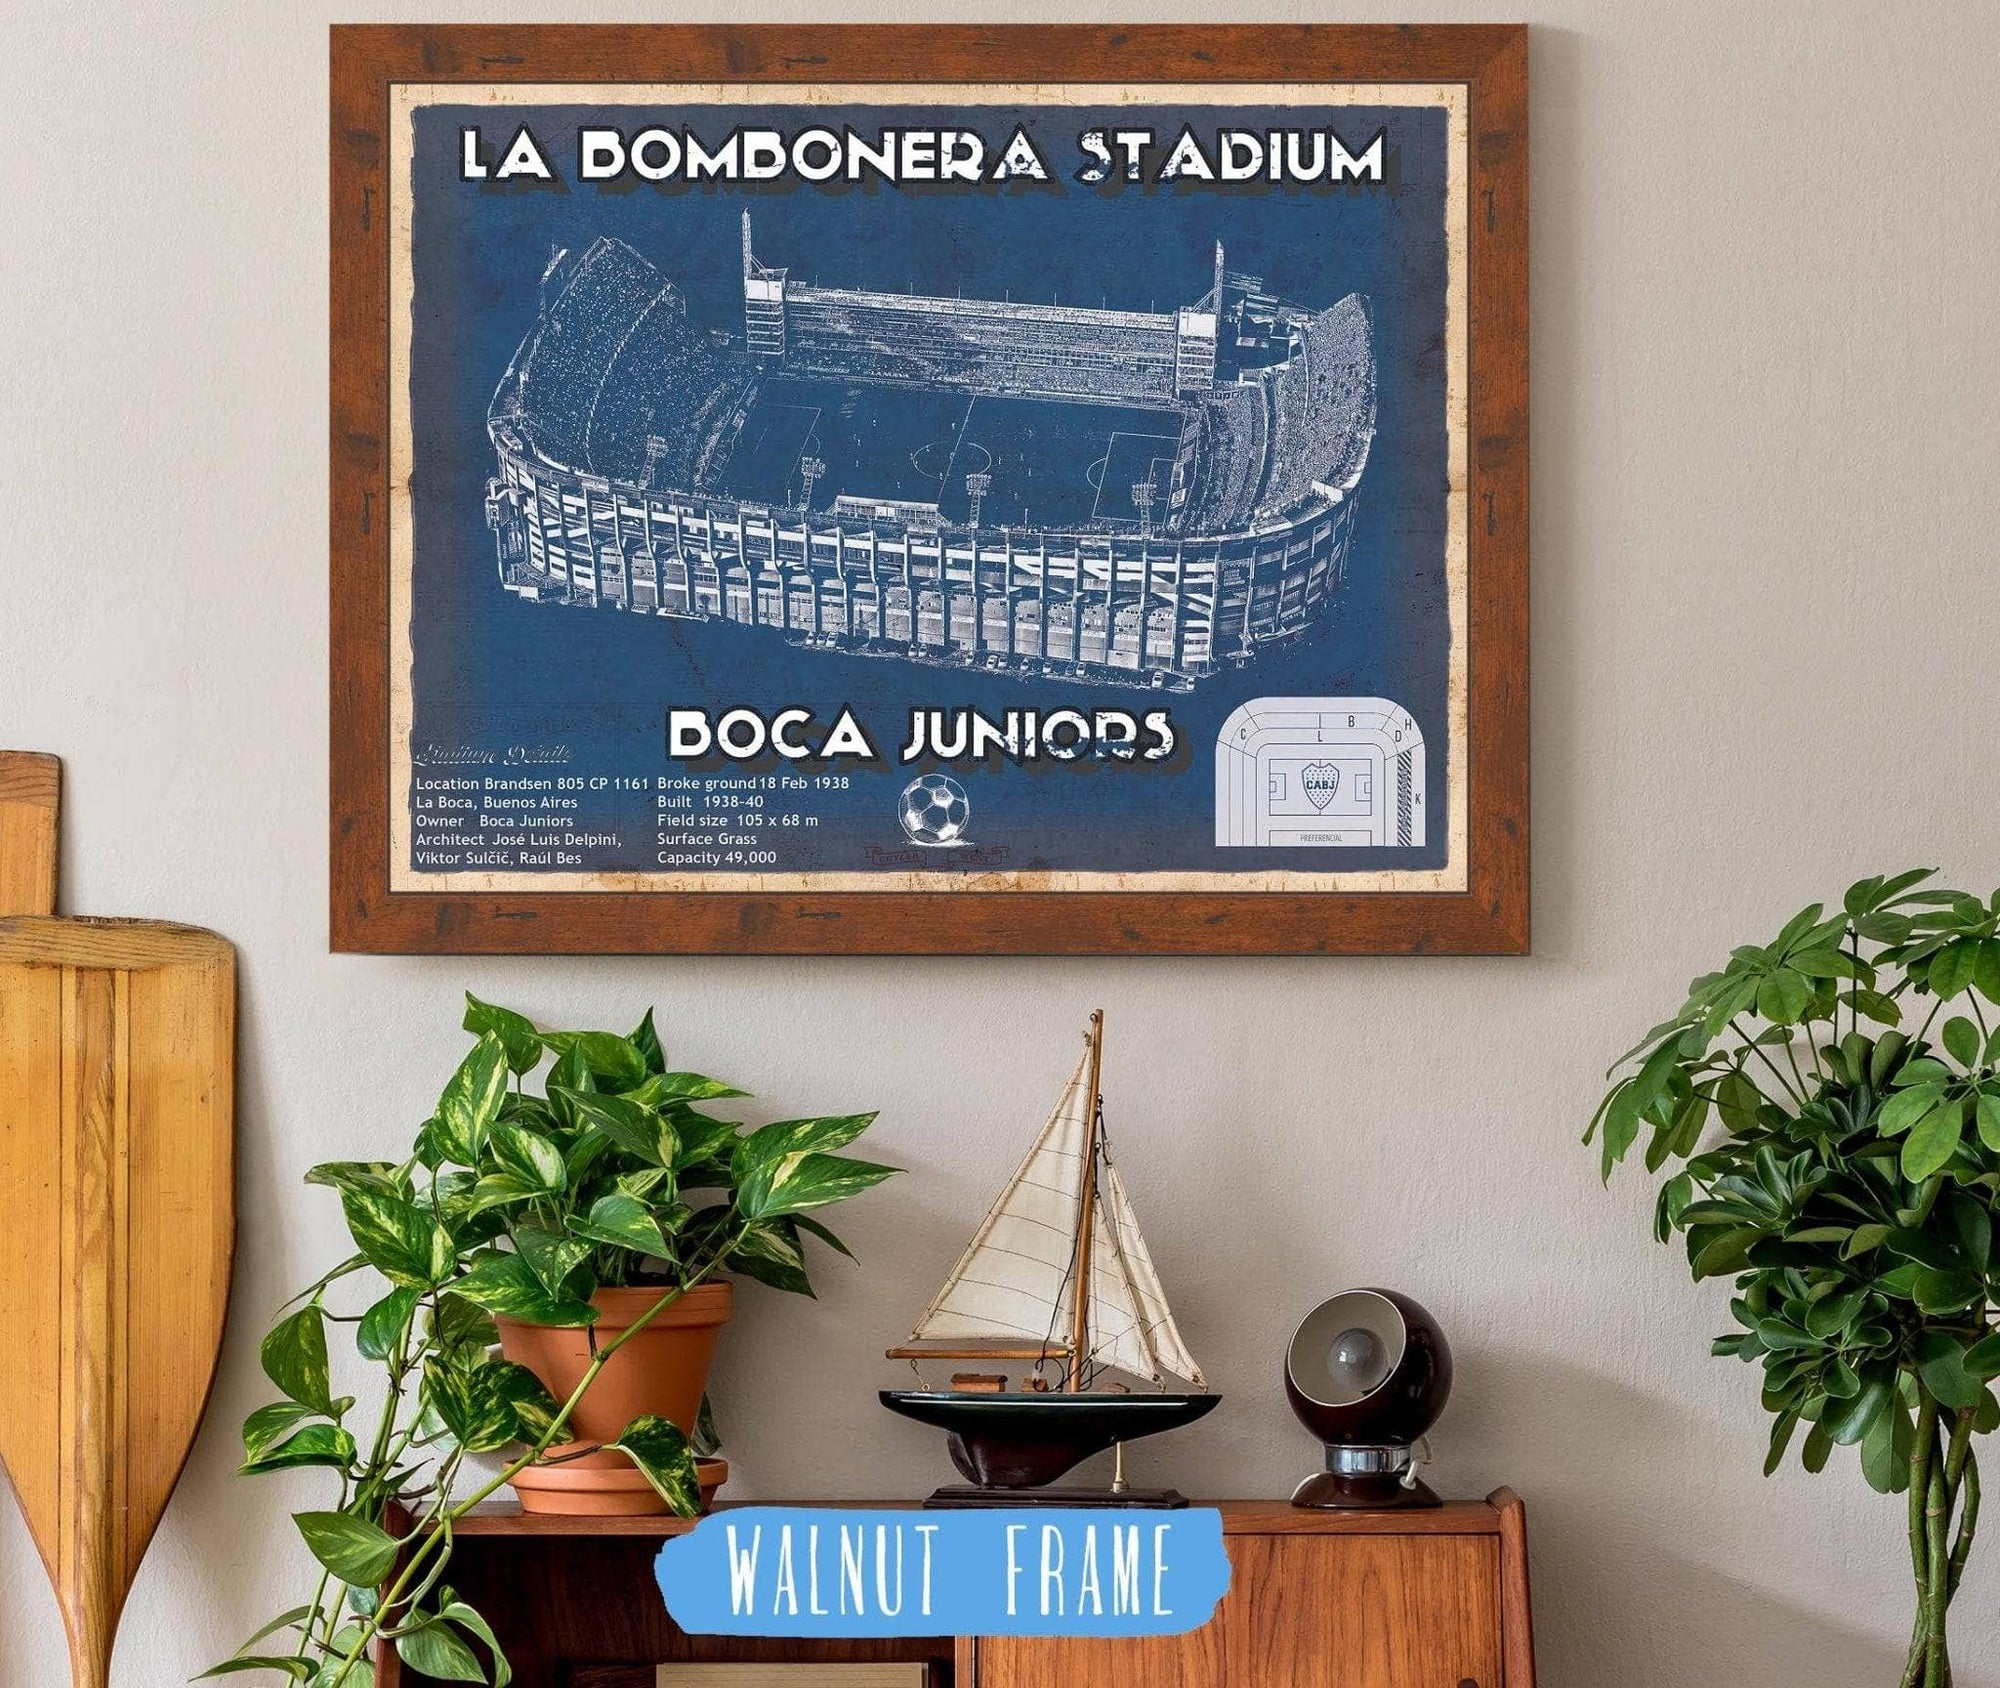 Cutler West Soccer Collection 14" x 11" / Walnut Frame Boca Juniors F.C - La Bombonera Stadium Soccer Print 733938727_48608